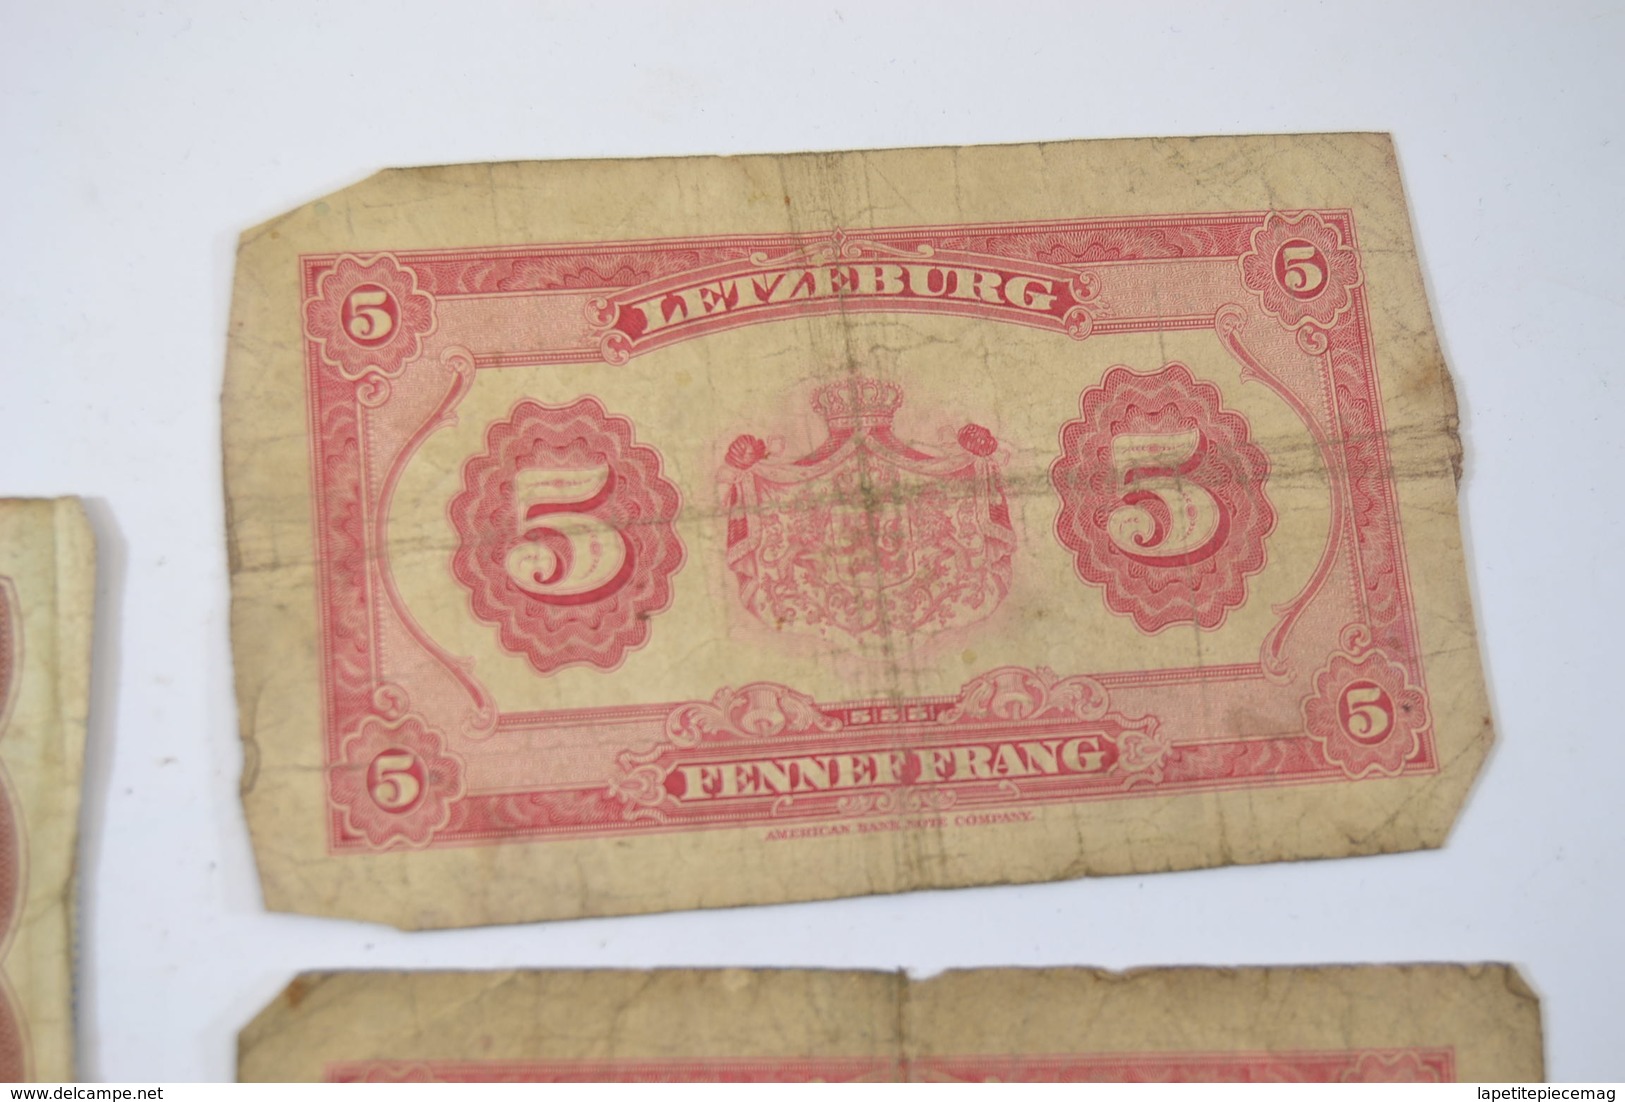 (AR10) Lot billets Luxembourg Letzeburg 100 francs 1944 ND, 20 francs 1945, 2 x 5frs et 10 francs